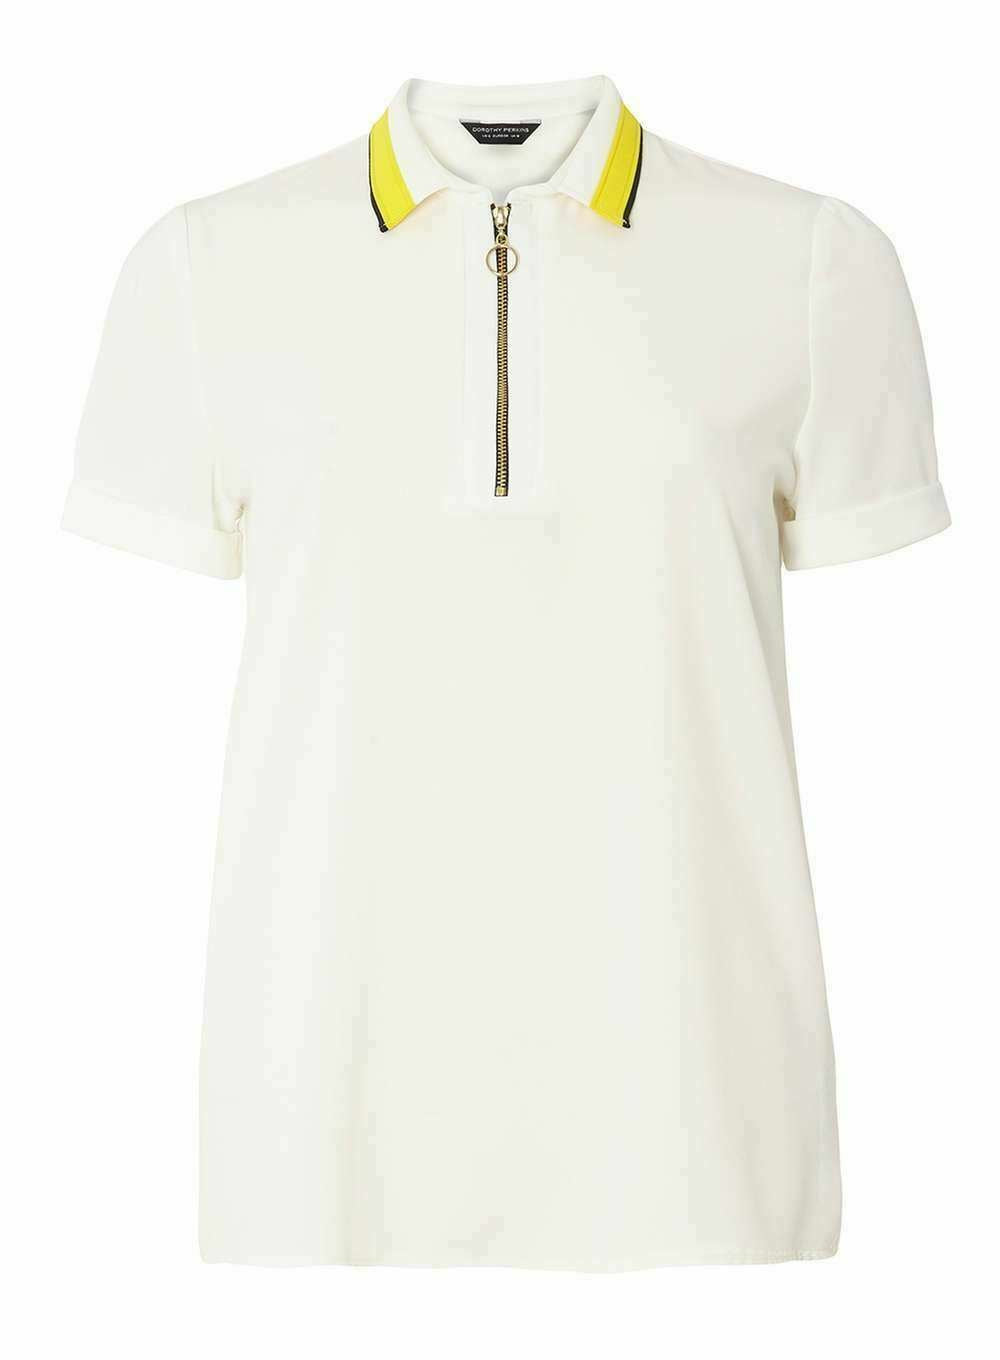 DOROTHY PERKINS Women's Yellow Collar White Polo Top size UK 12